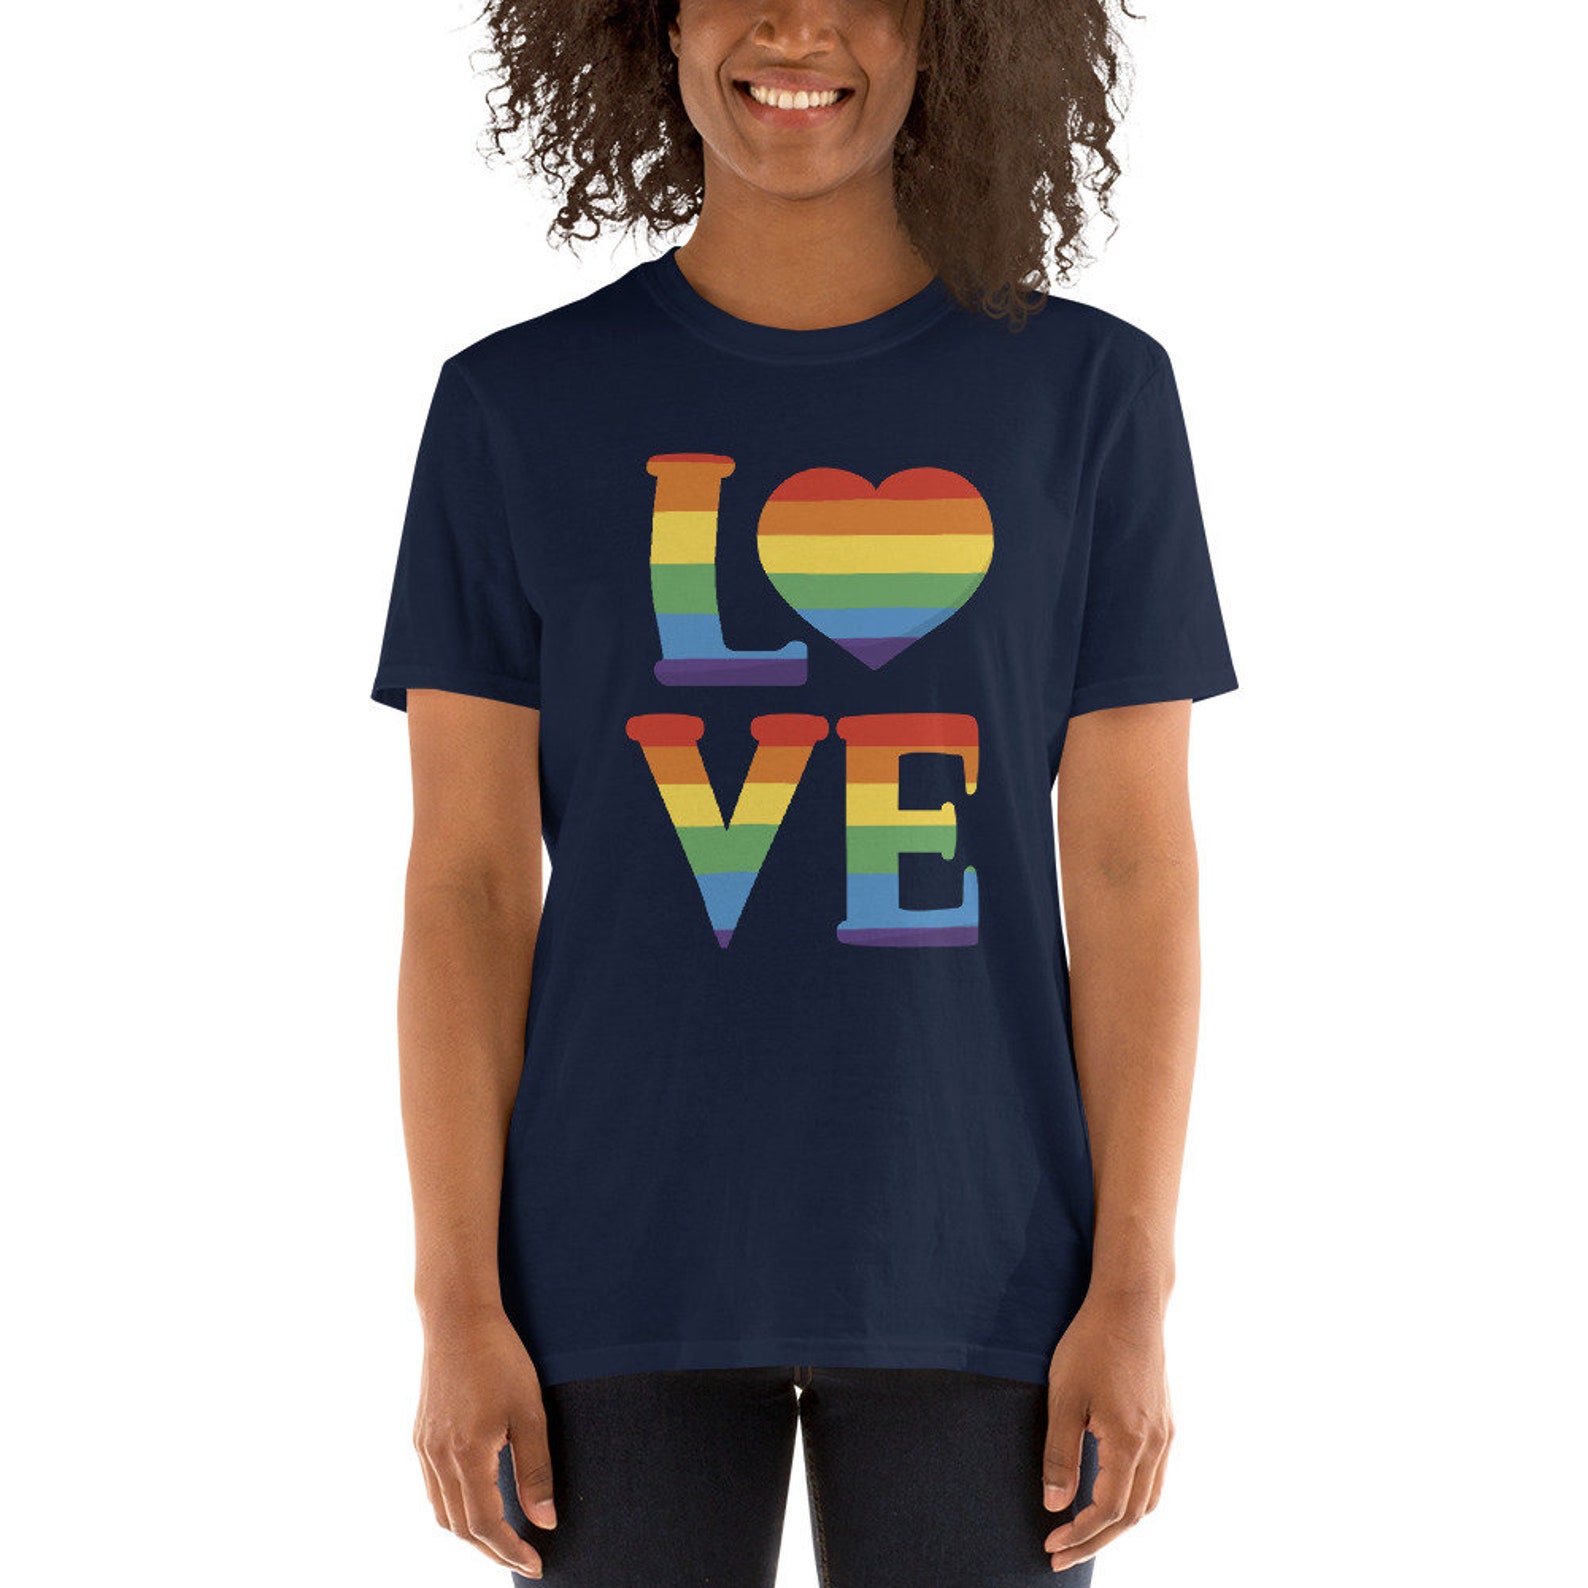 LOVE Rainbow graphic Shirt Philadelphia LOVE LGBQT shirt | Etsy